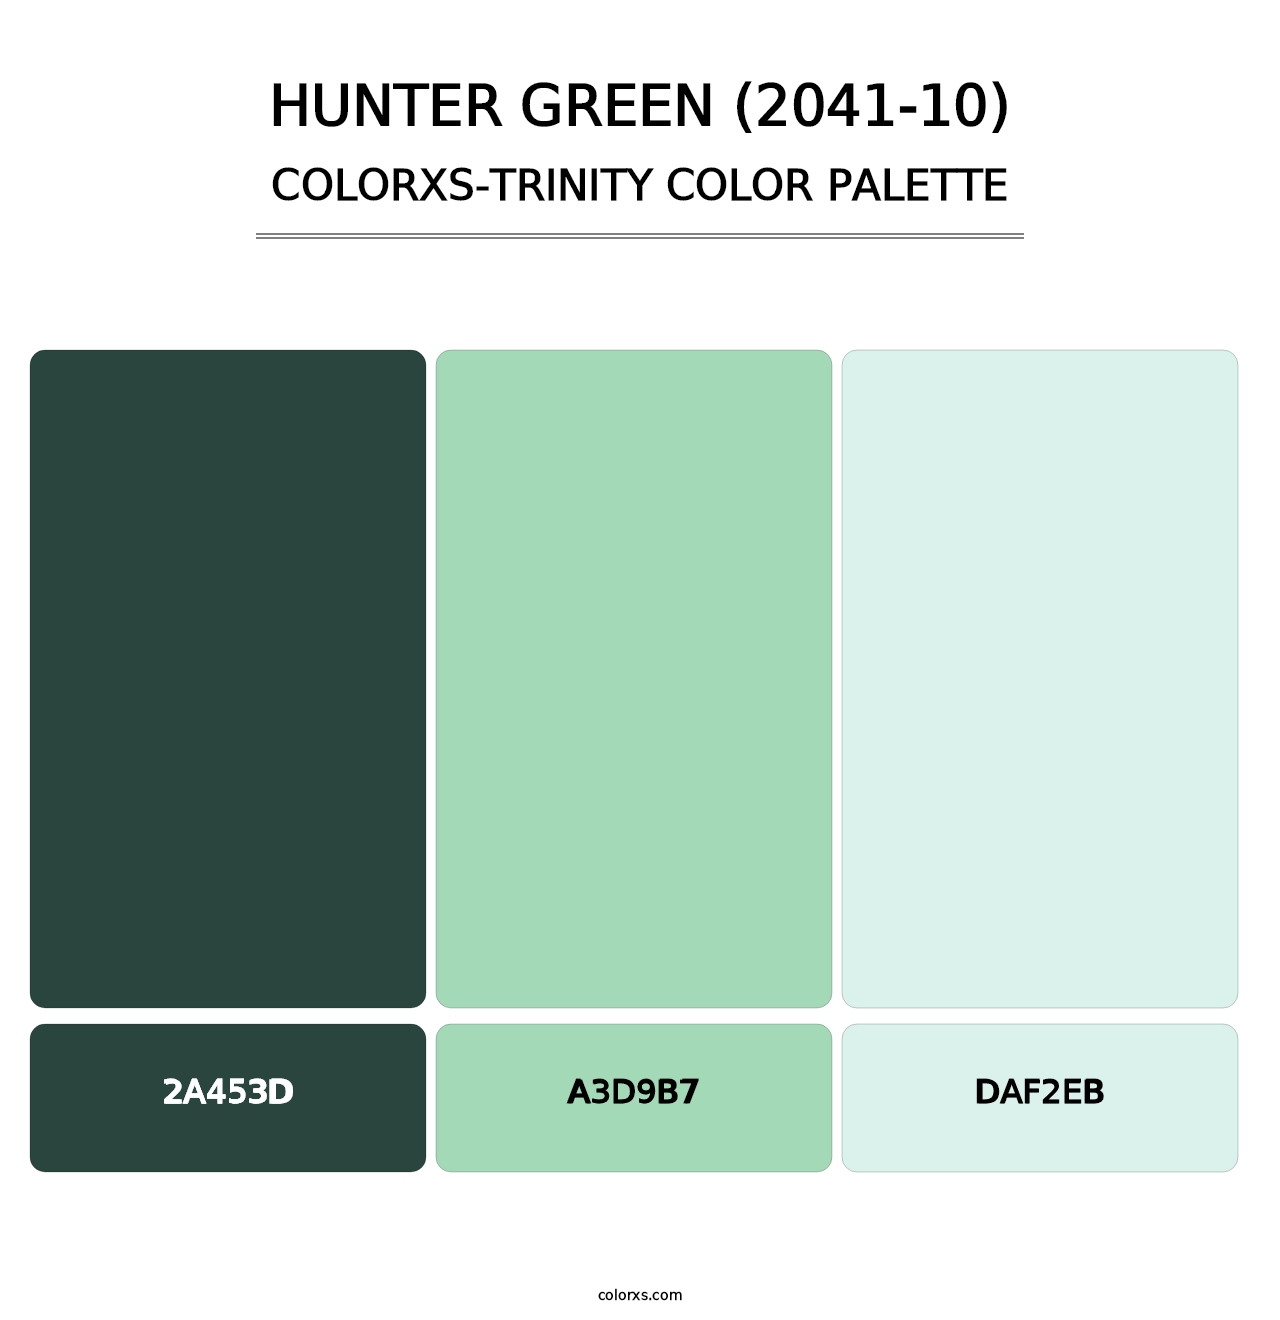 Hunter Green (2041-10) - Colorxs Trinity Palette